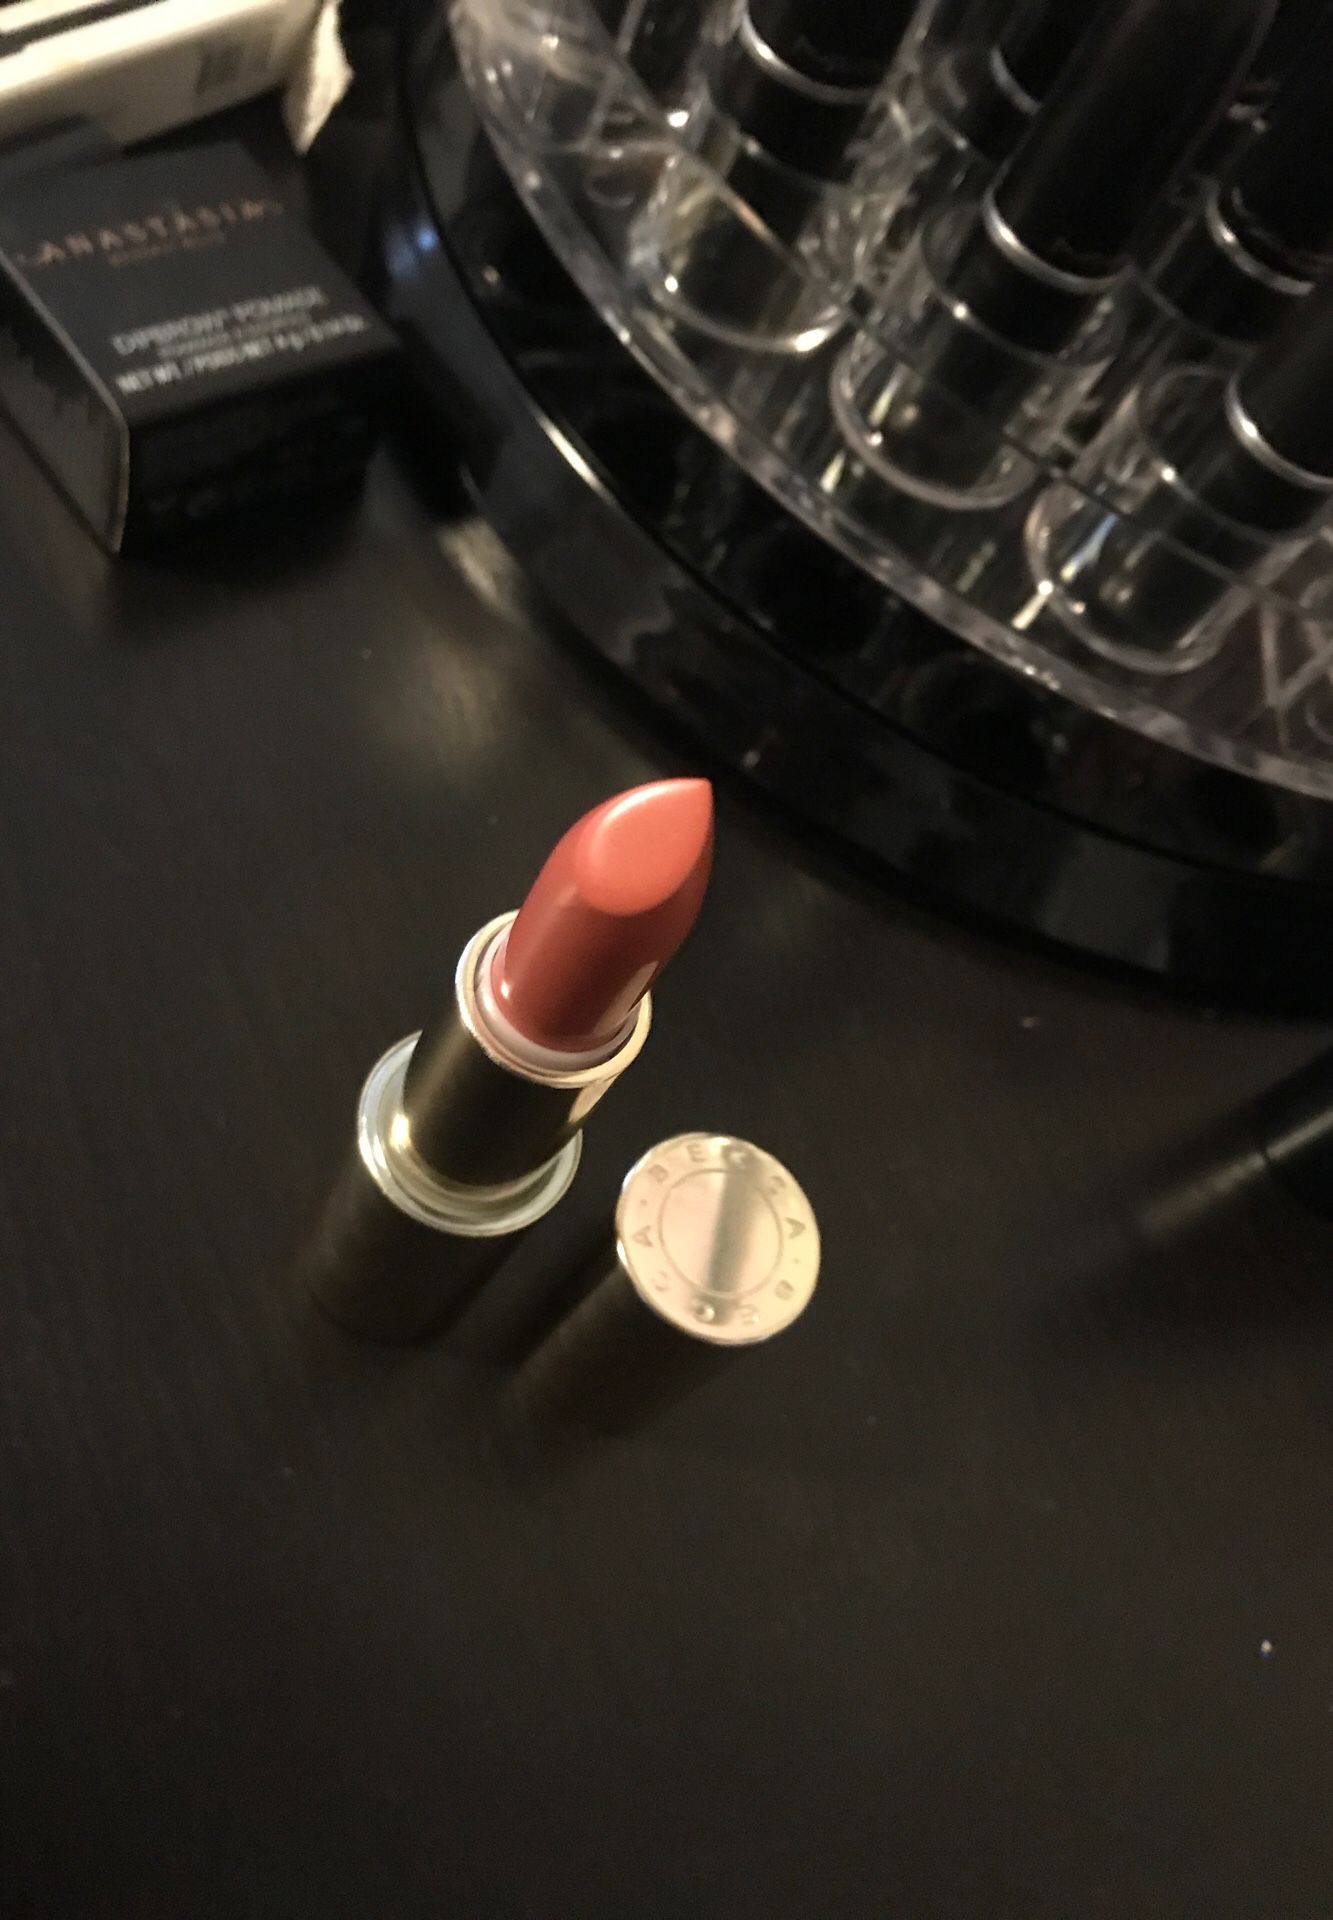 Becca lipstick shade ( tulip )